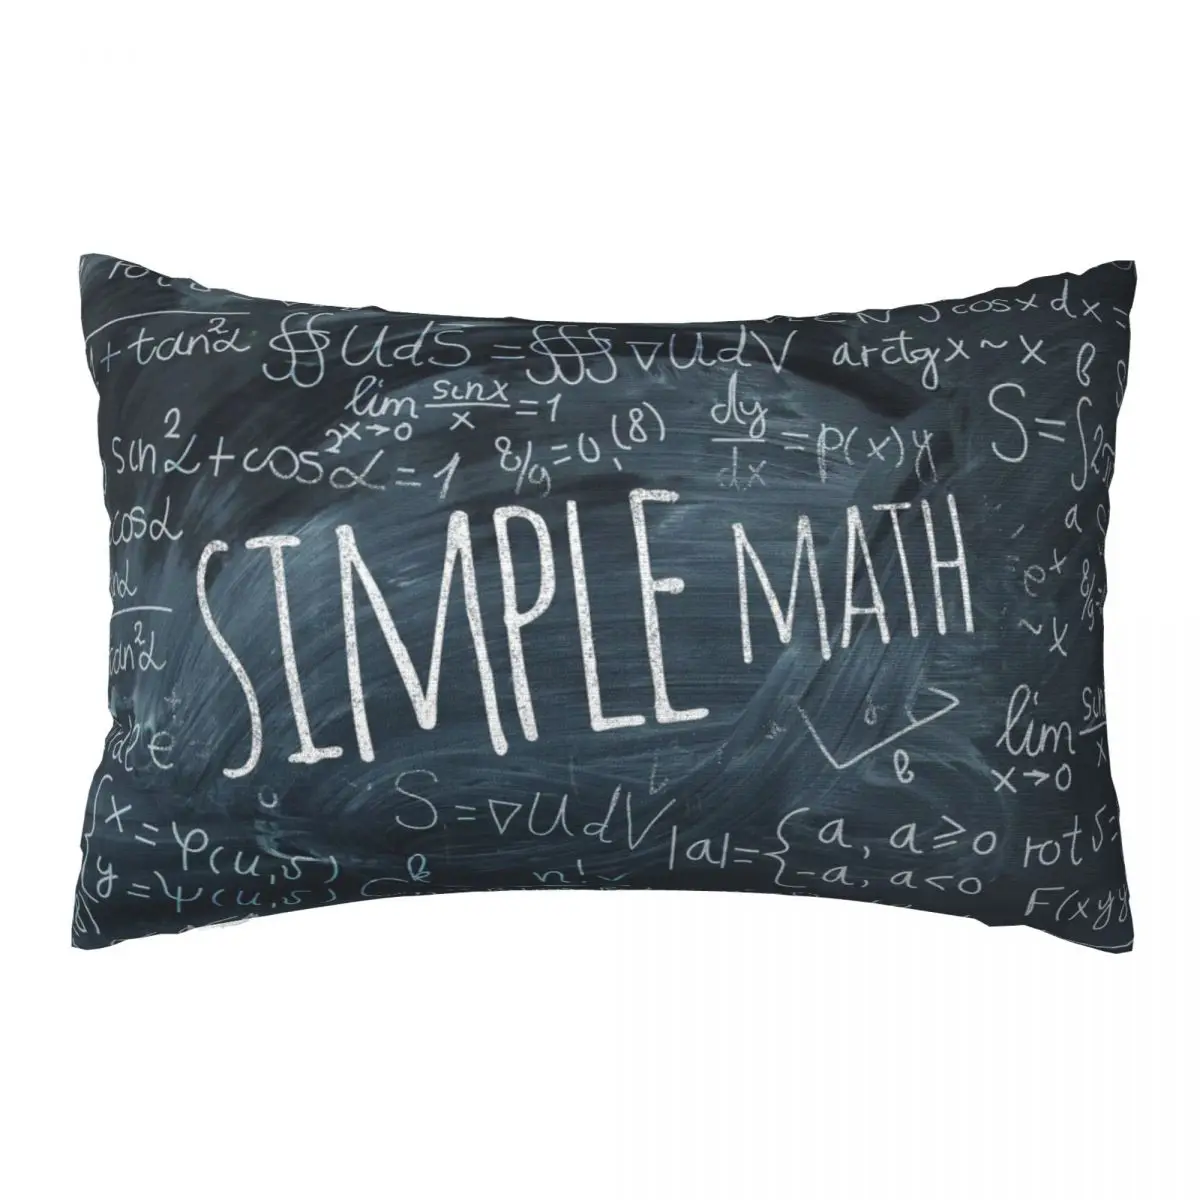 

Simple Math Decorative Pillow Covers Throw Pillow Cover Home Pillows Shells Cushion Cover Zippered Pillowcase